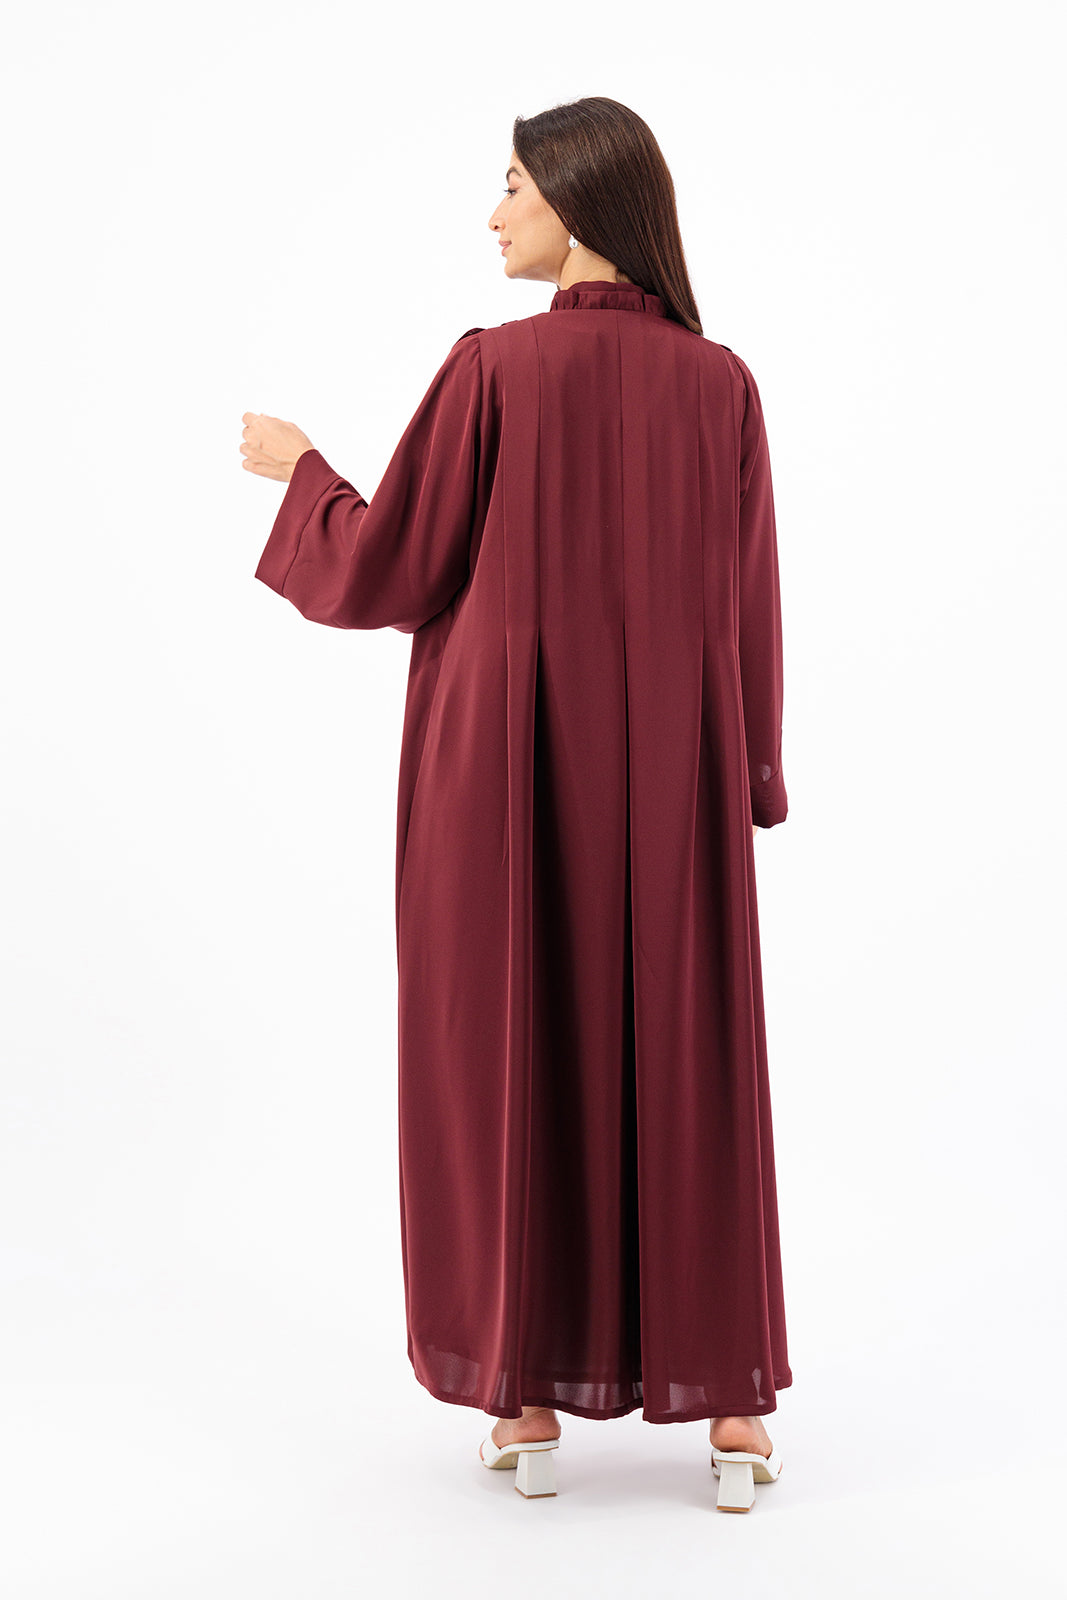 Tone on Tone asymmetrical front ruffled with back pleated abaya